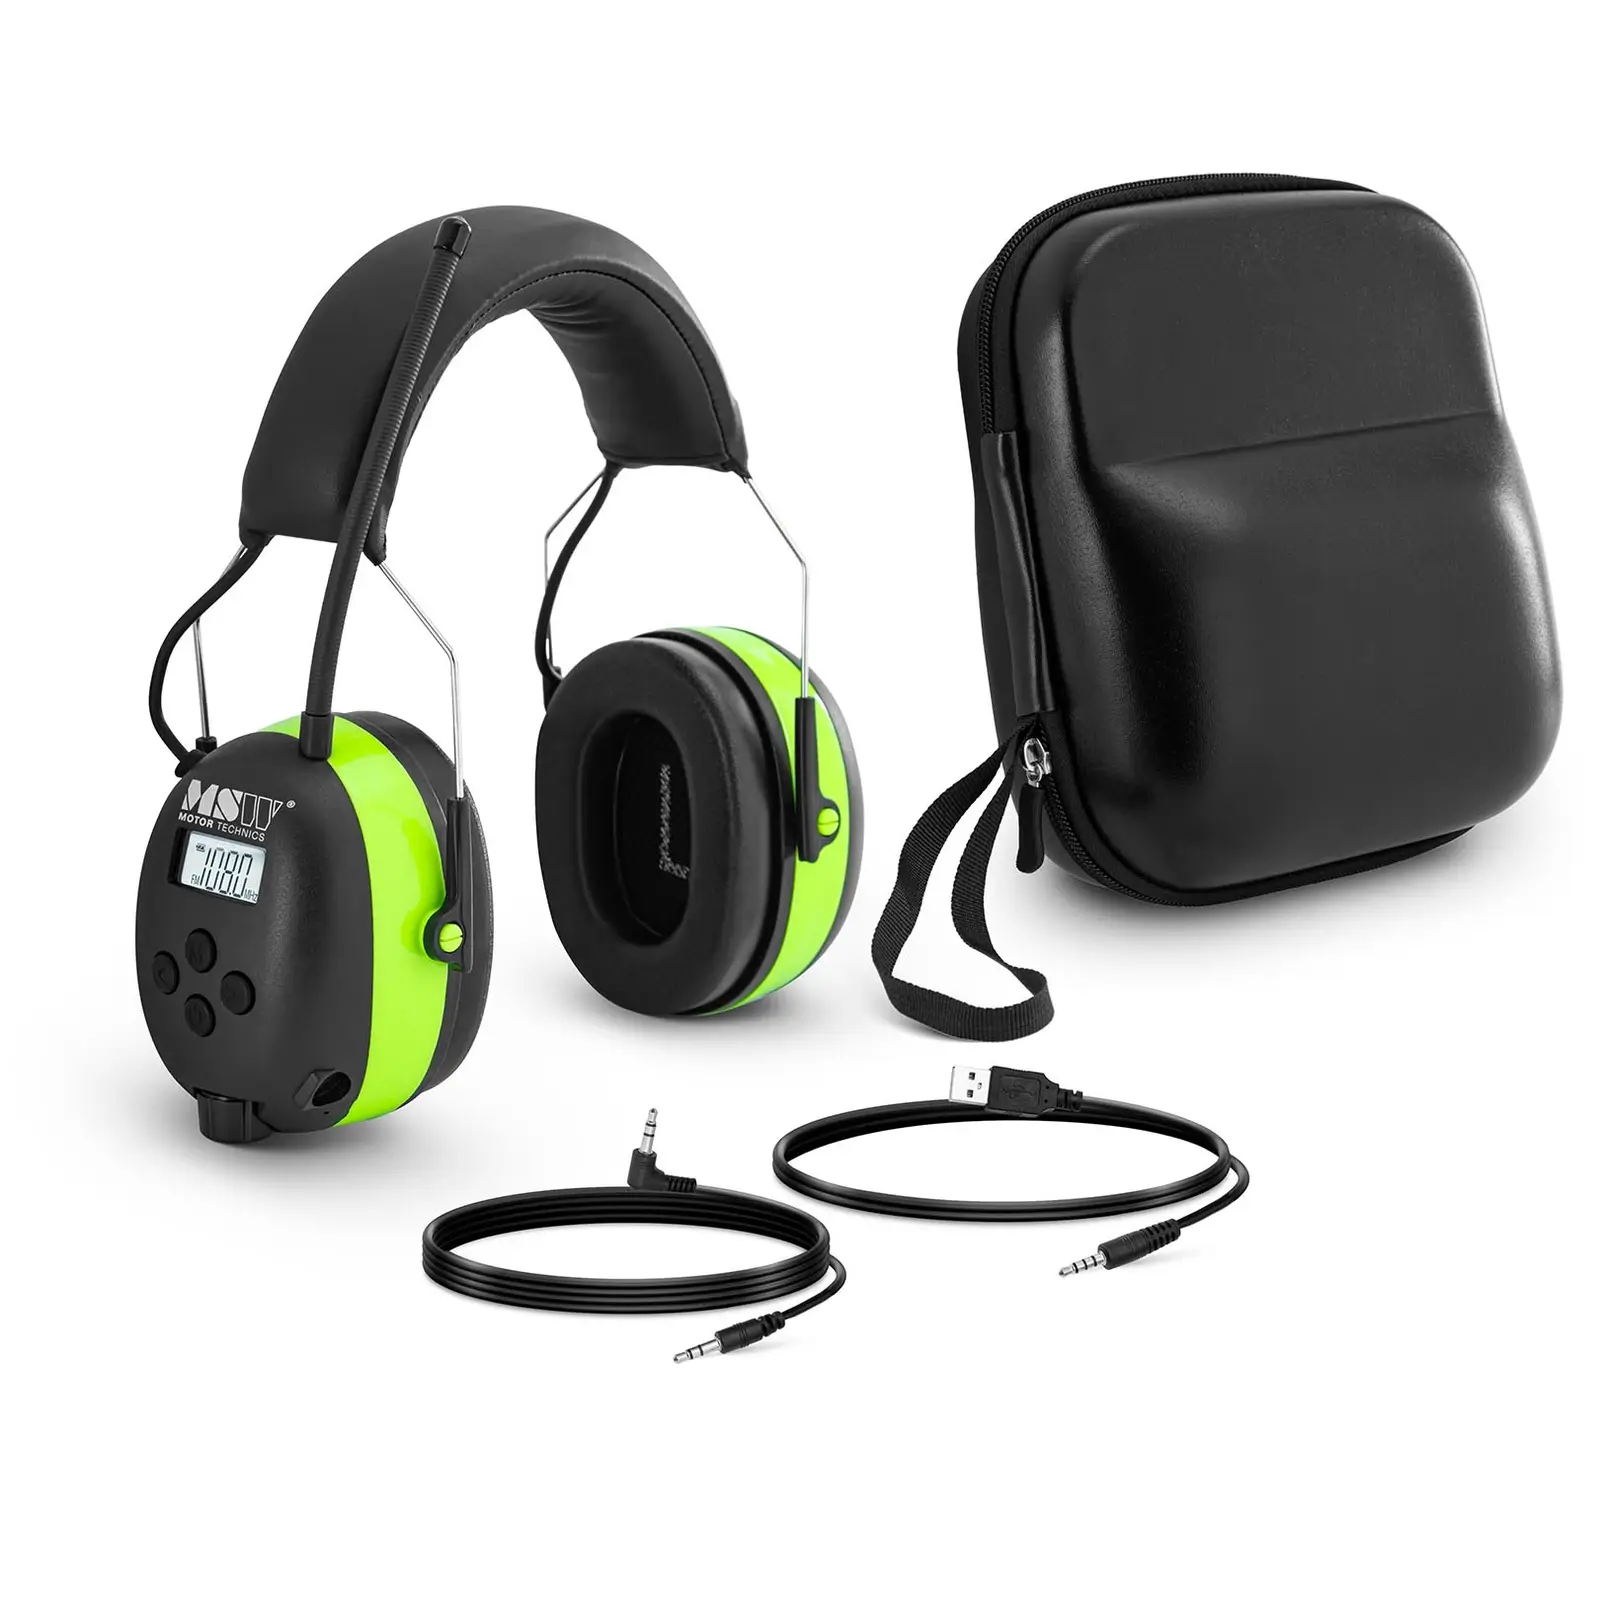 Pracovní sluchátka s Bluetooth - mikrofon - LCD displej - baterie - zelená barva